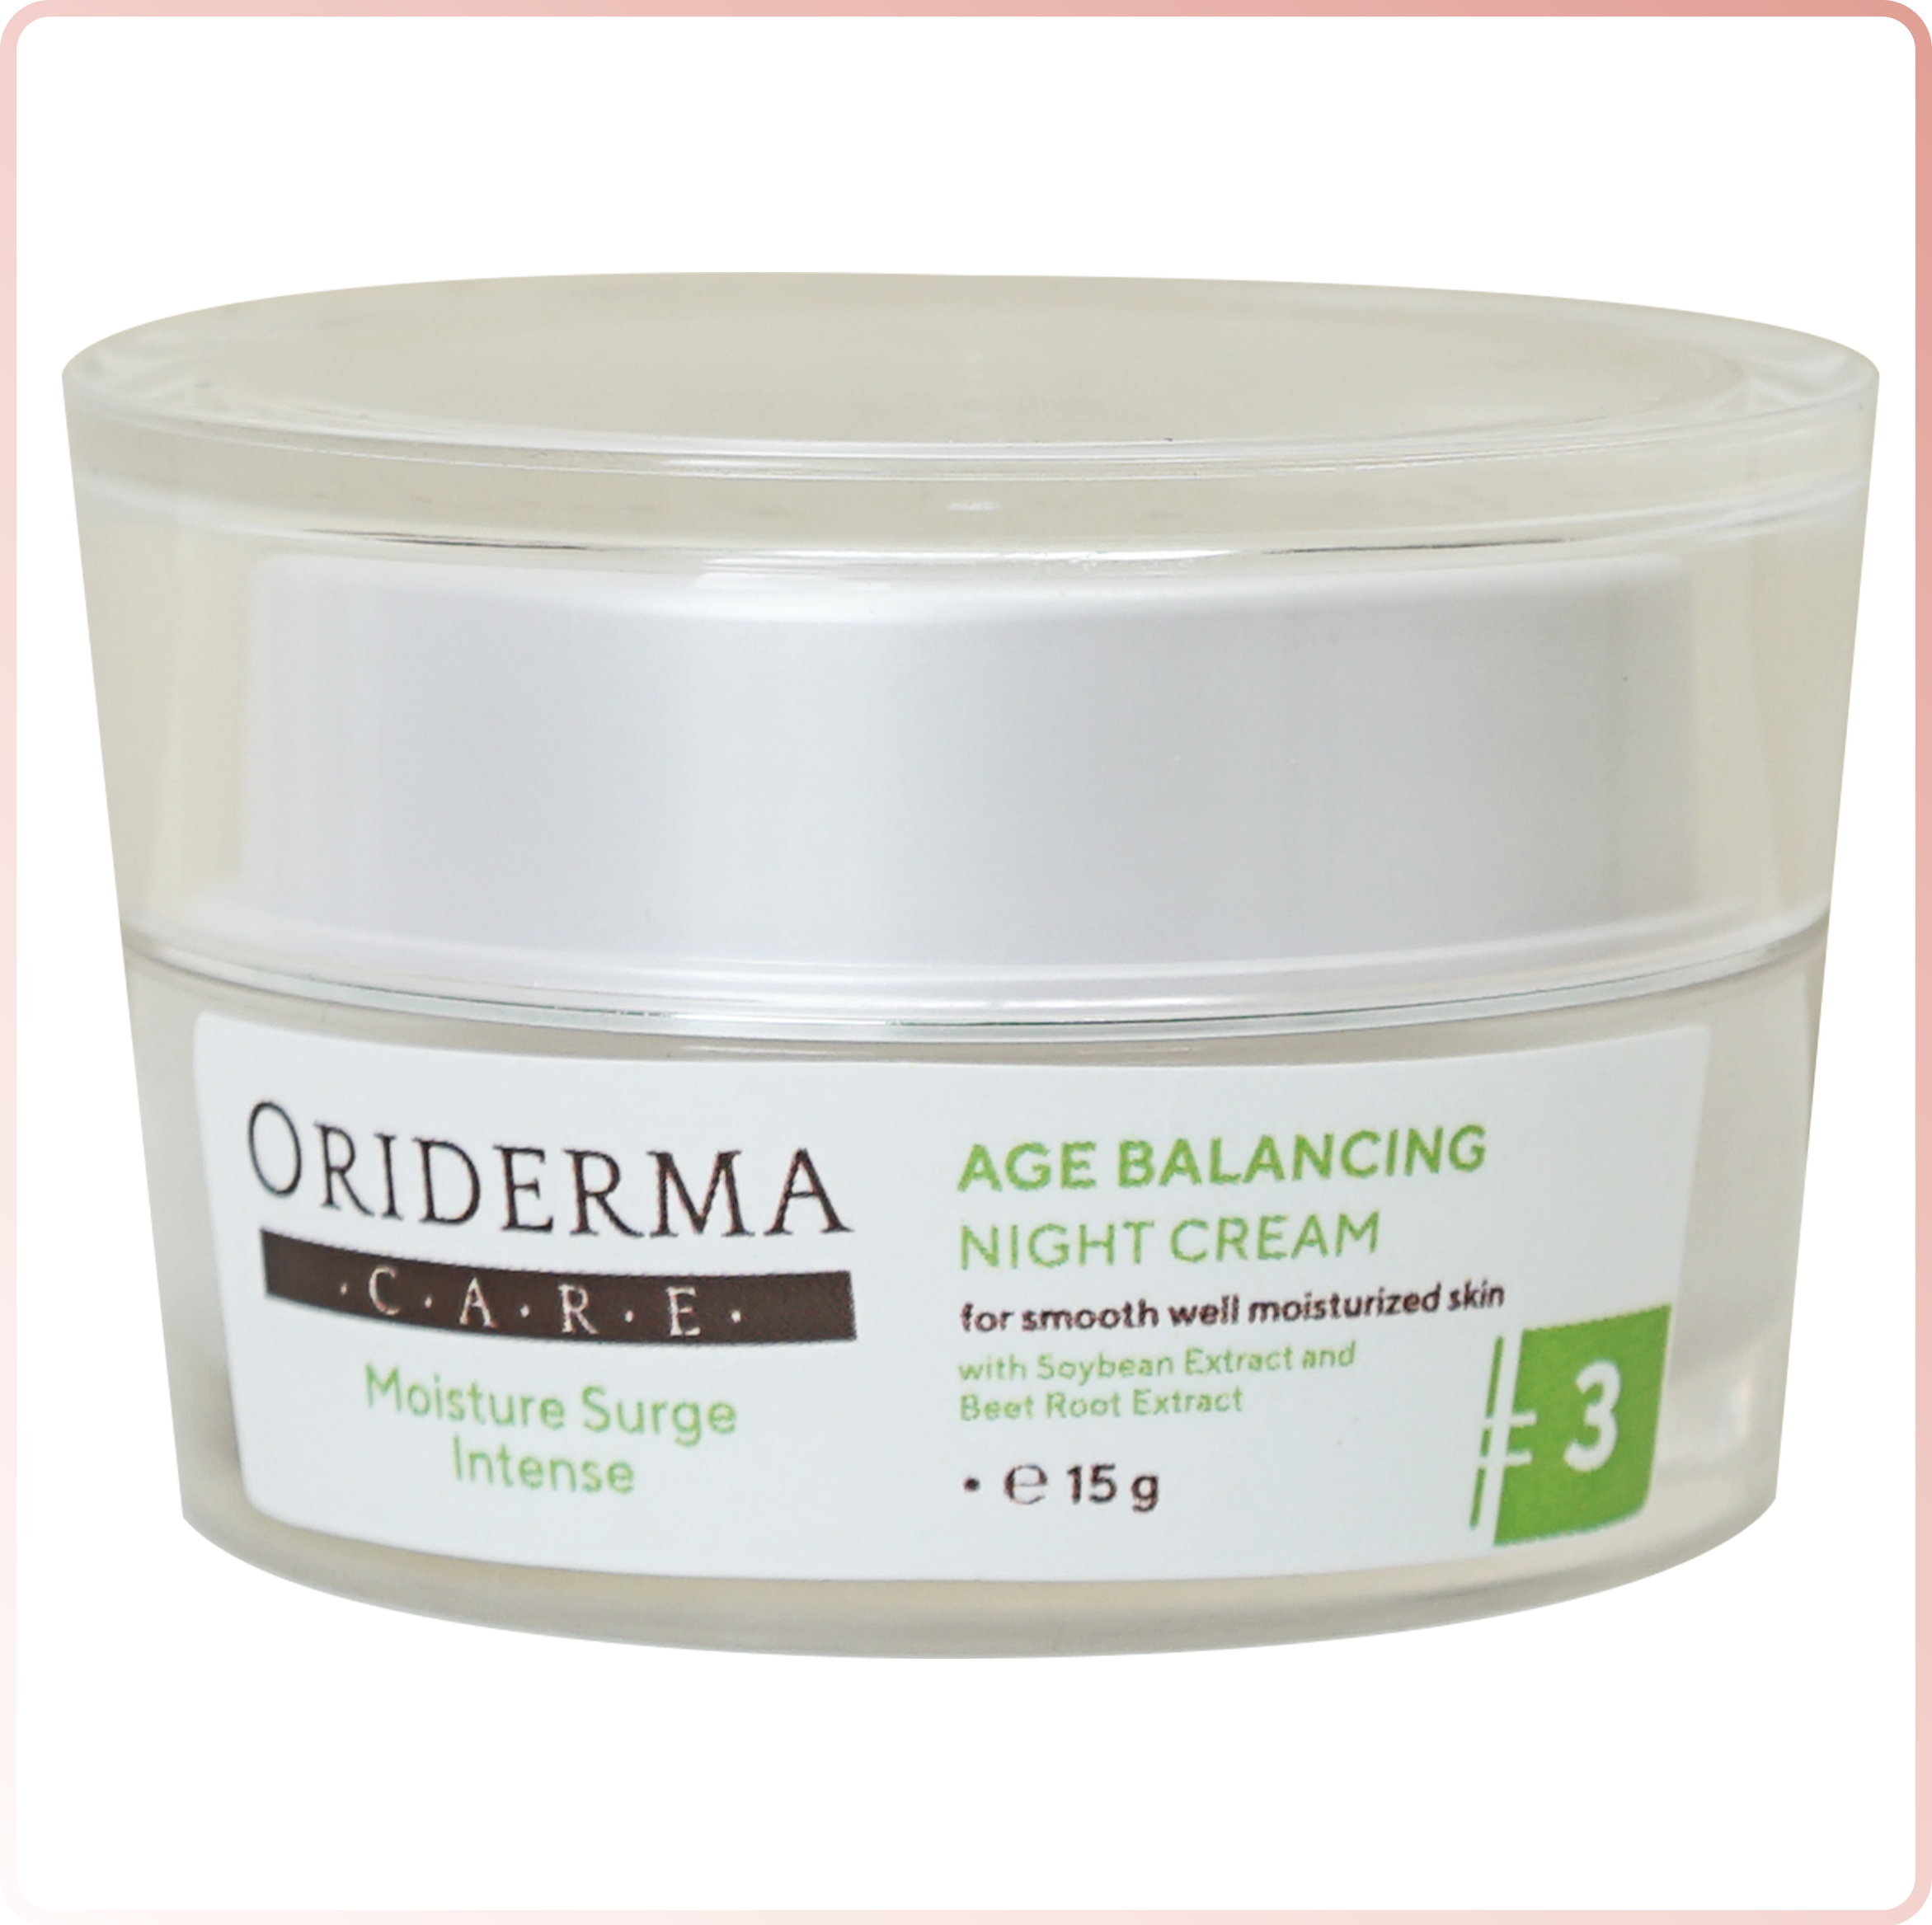 Age Balancing Night Cream